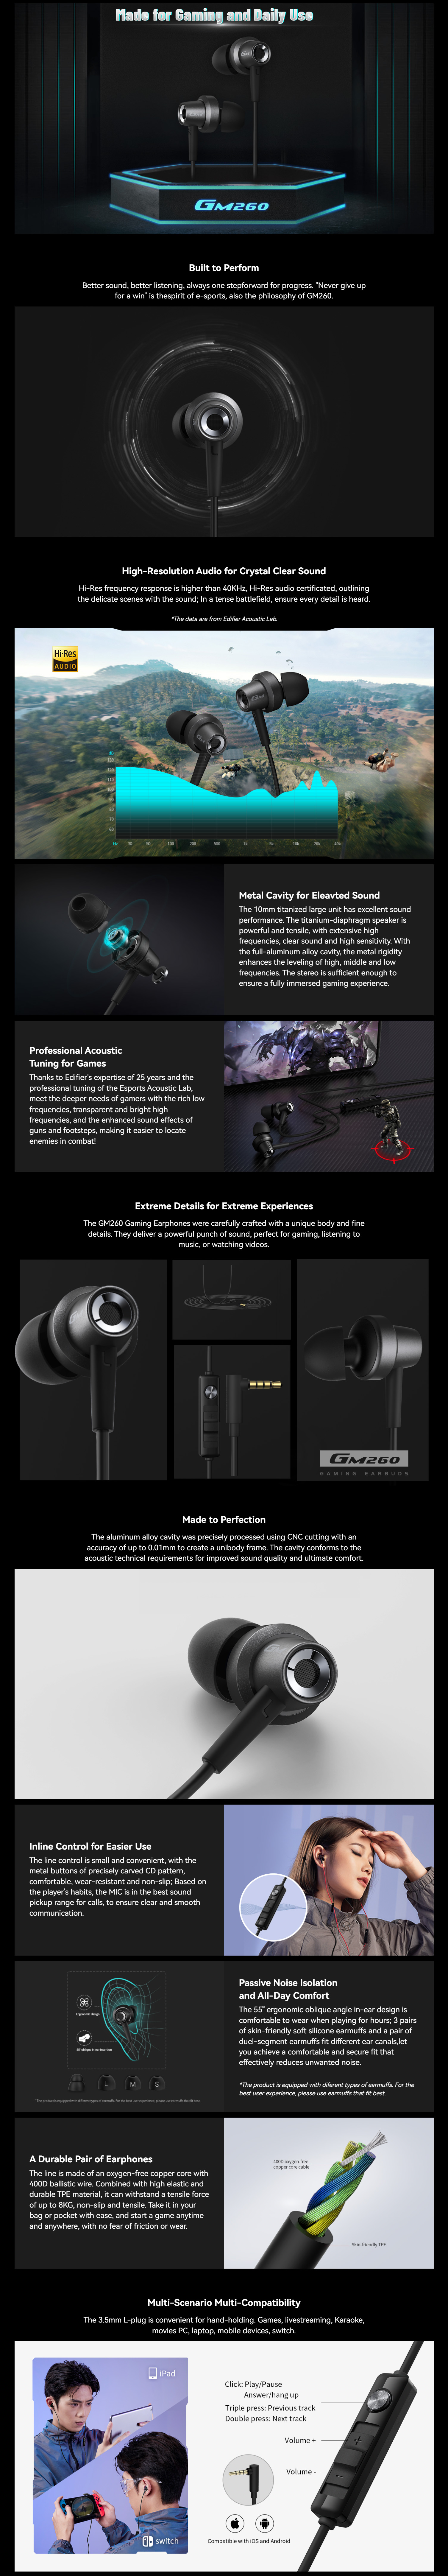 Headphones-Edifier-GM260-Earbuds-with-Microphone-Black-1